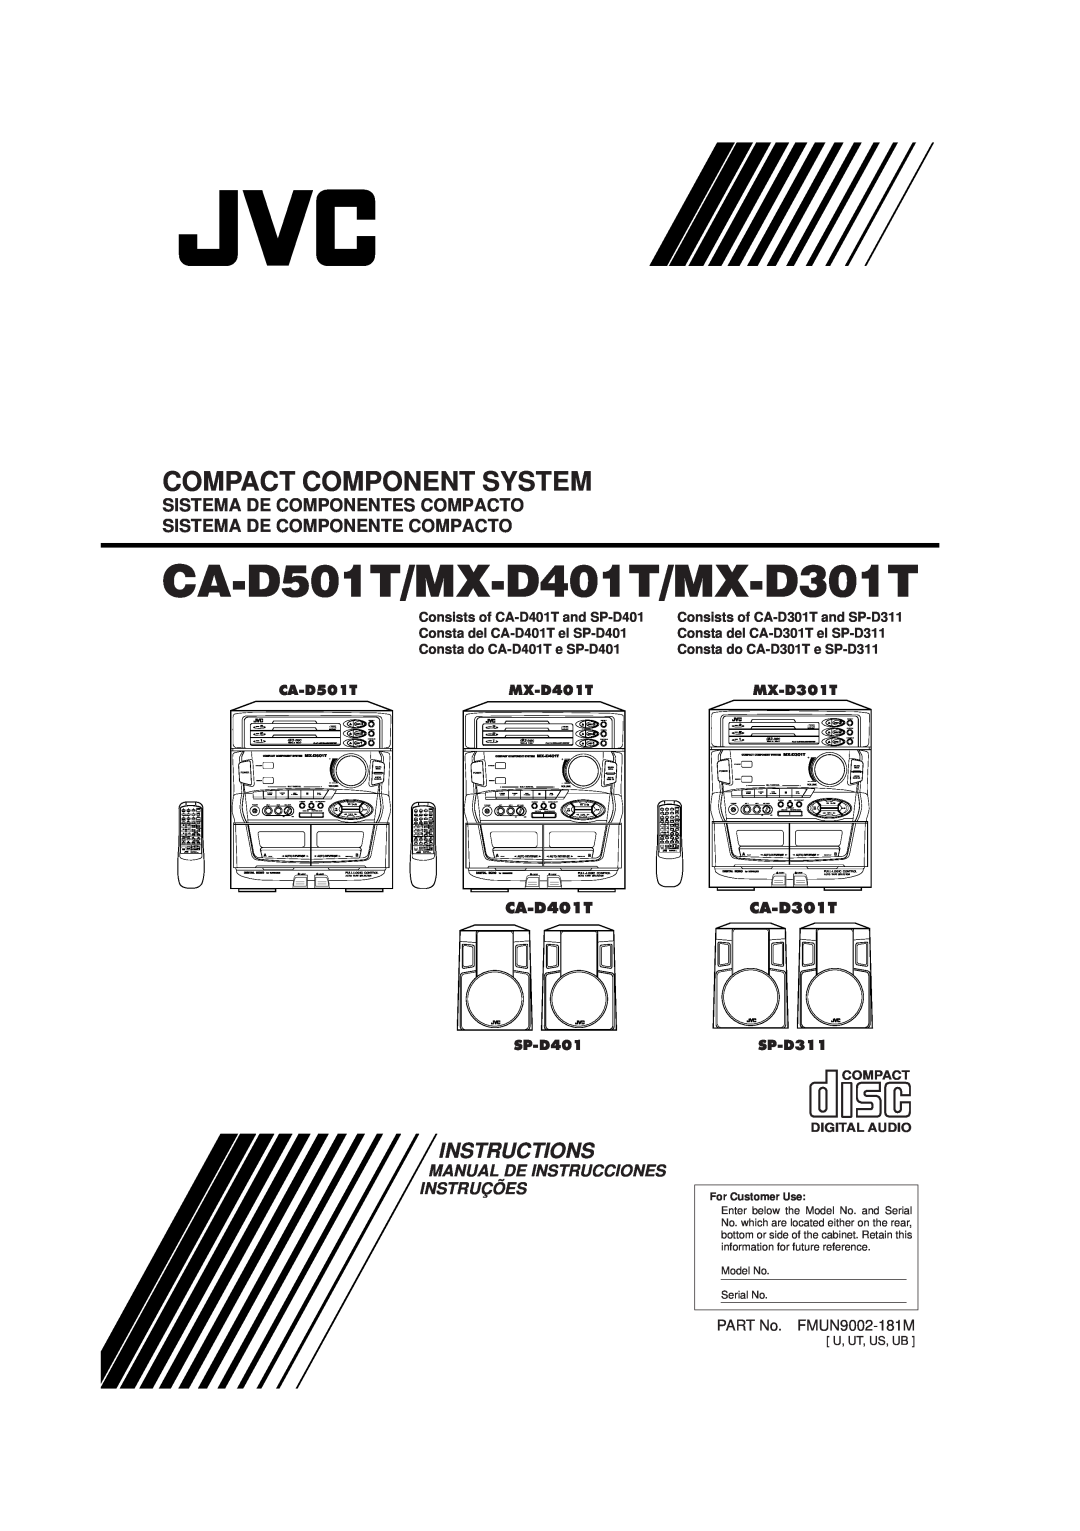 JVC manual Compact Component System, CA-D501T/MX-D401T/MX-D301T, Instructions, Manual De Instrucciones Instruções 